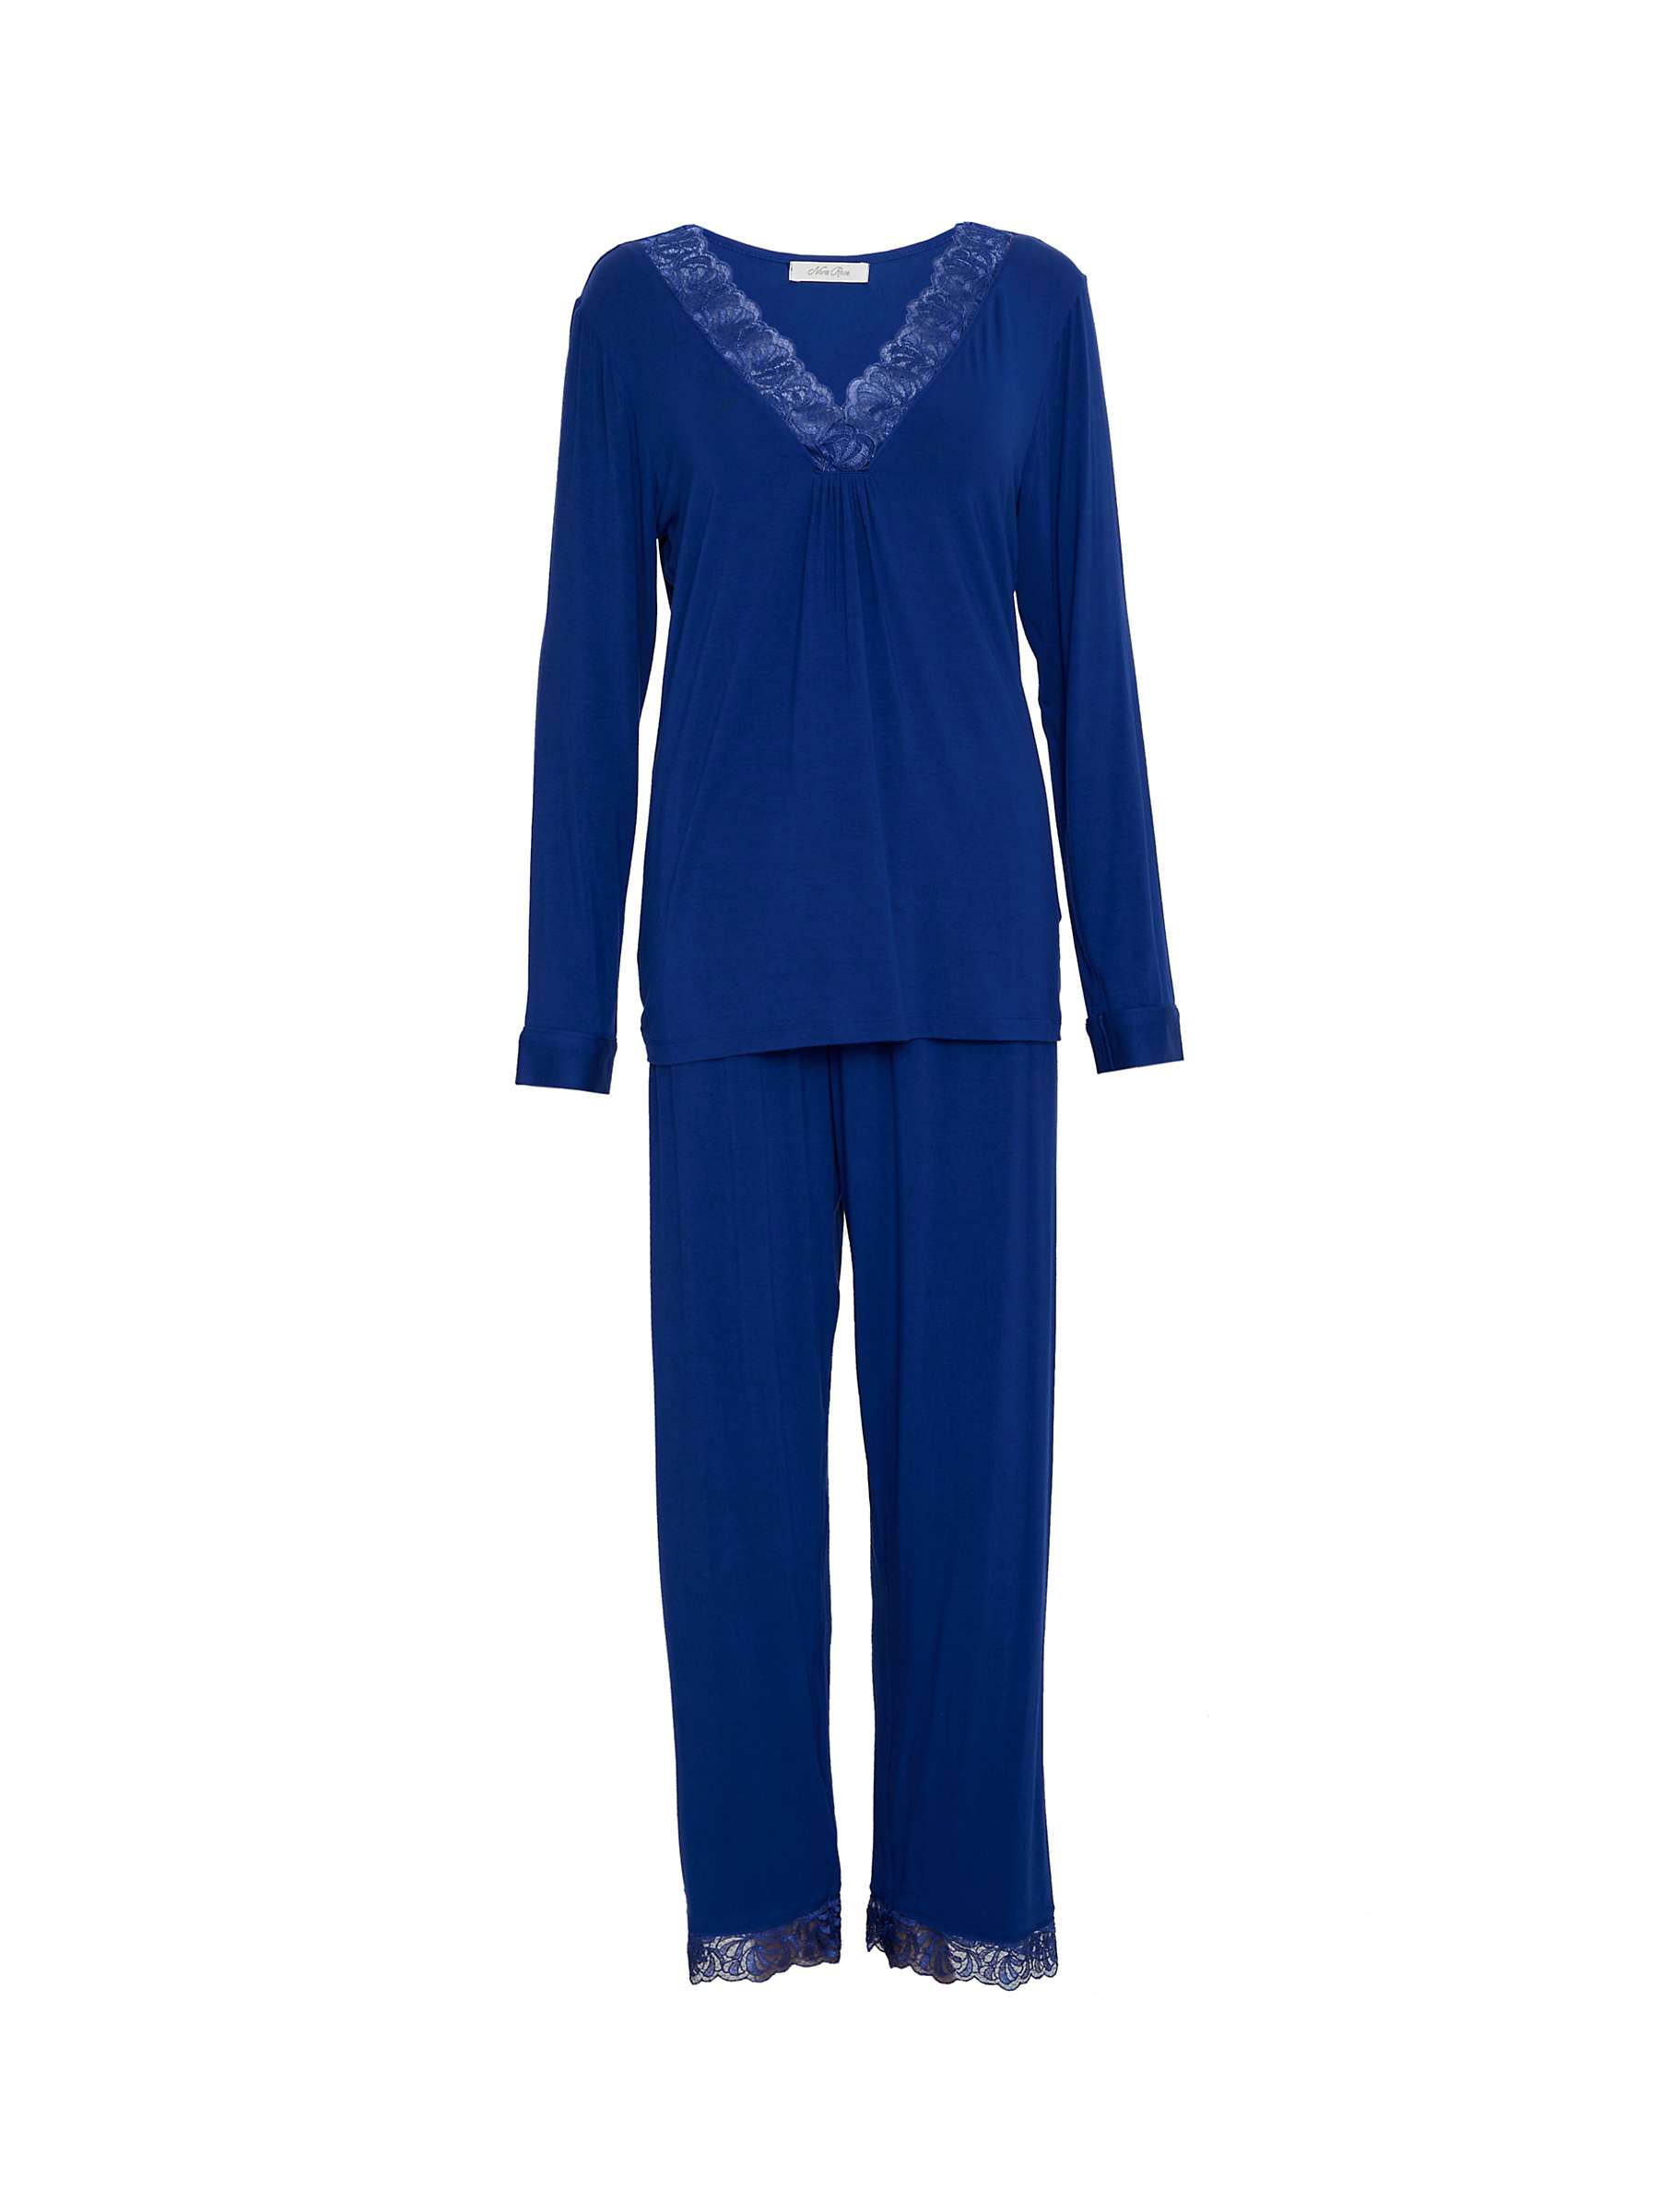 Buy Nora Rose by Cyberjammies Ceclia Jersey Pyjama Set, Navy Online at johnlewis.com